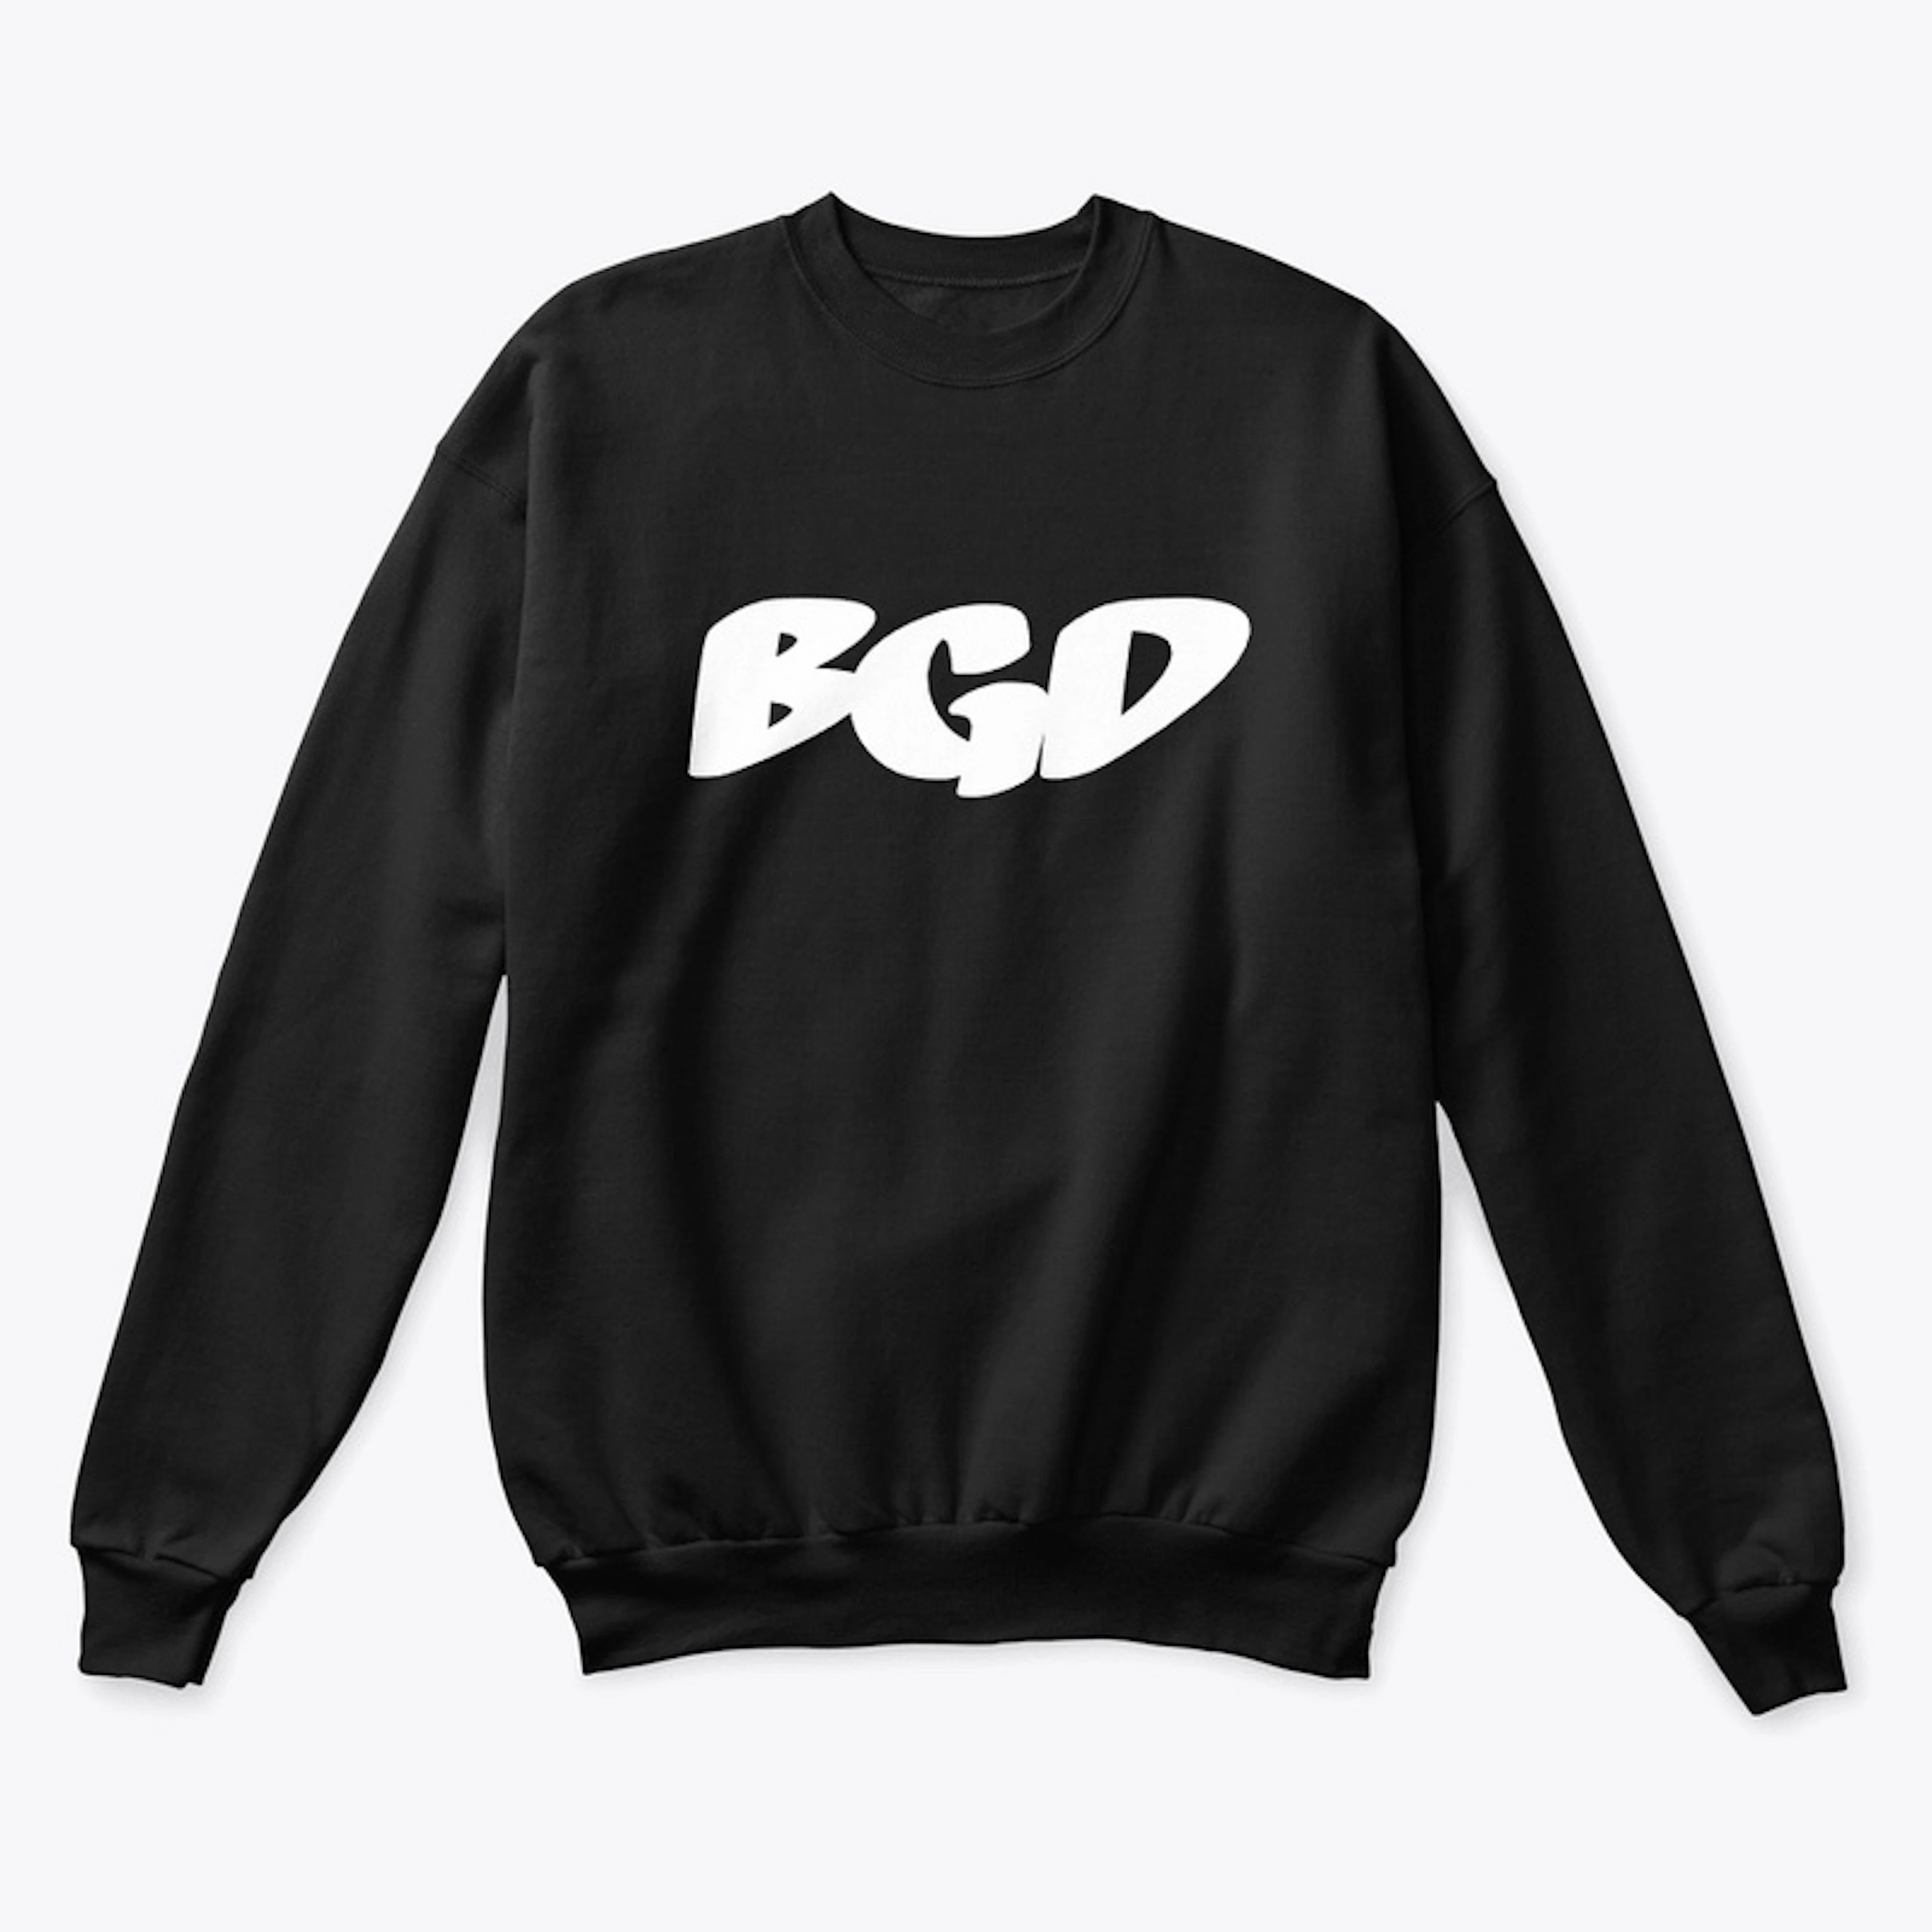 BGD: Active wear